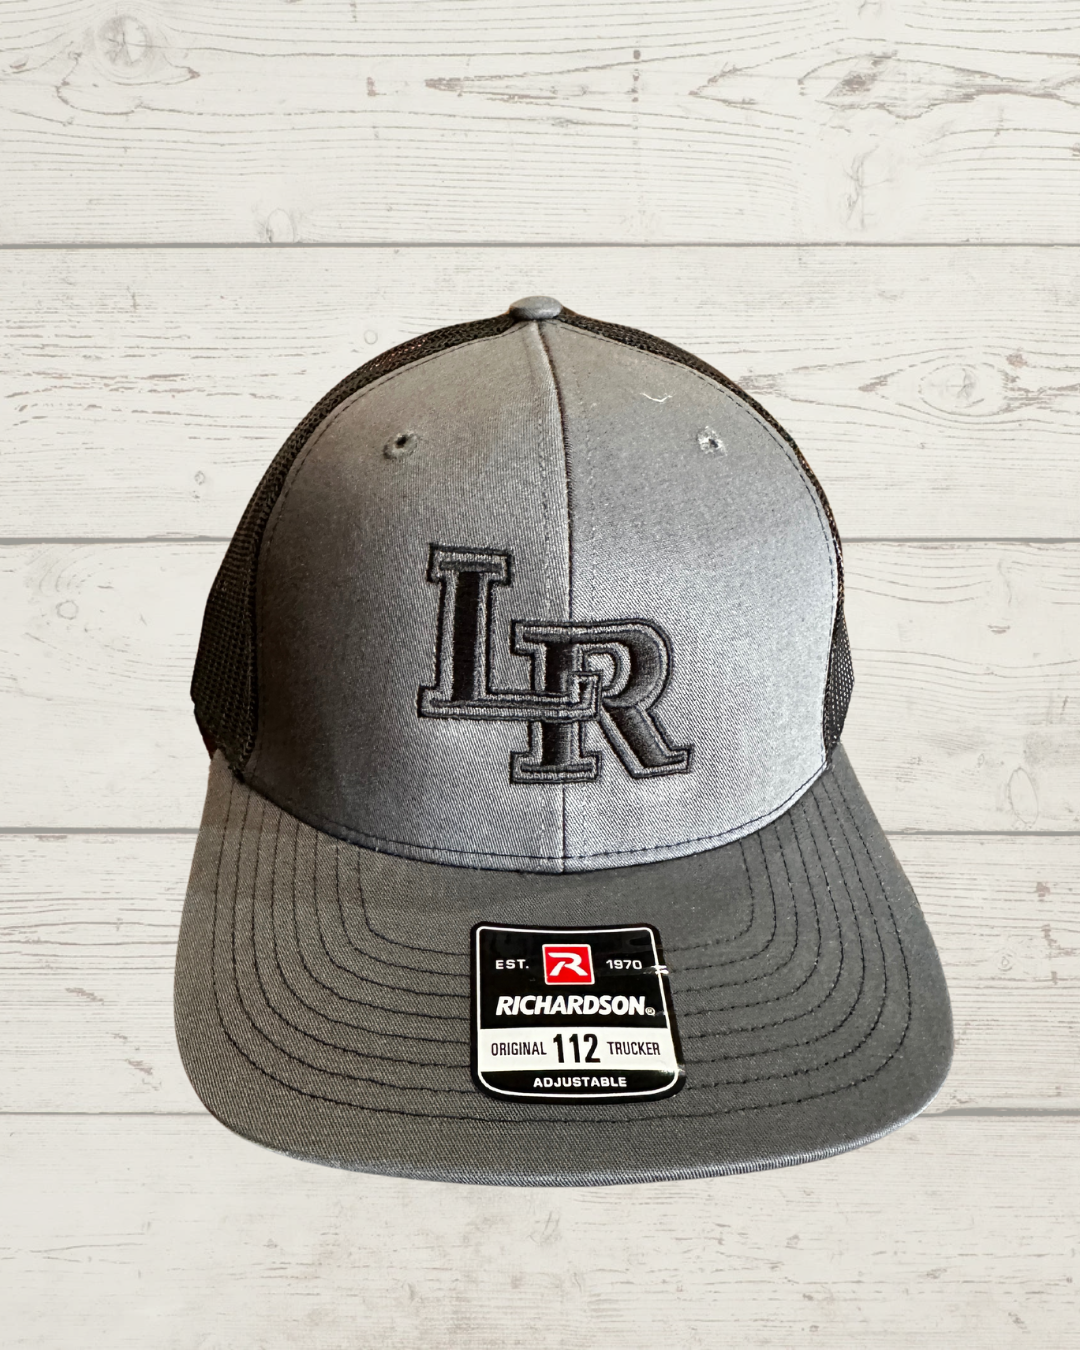 OC LH Grey Snapback Hat